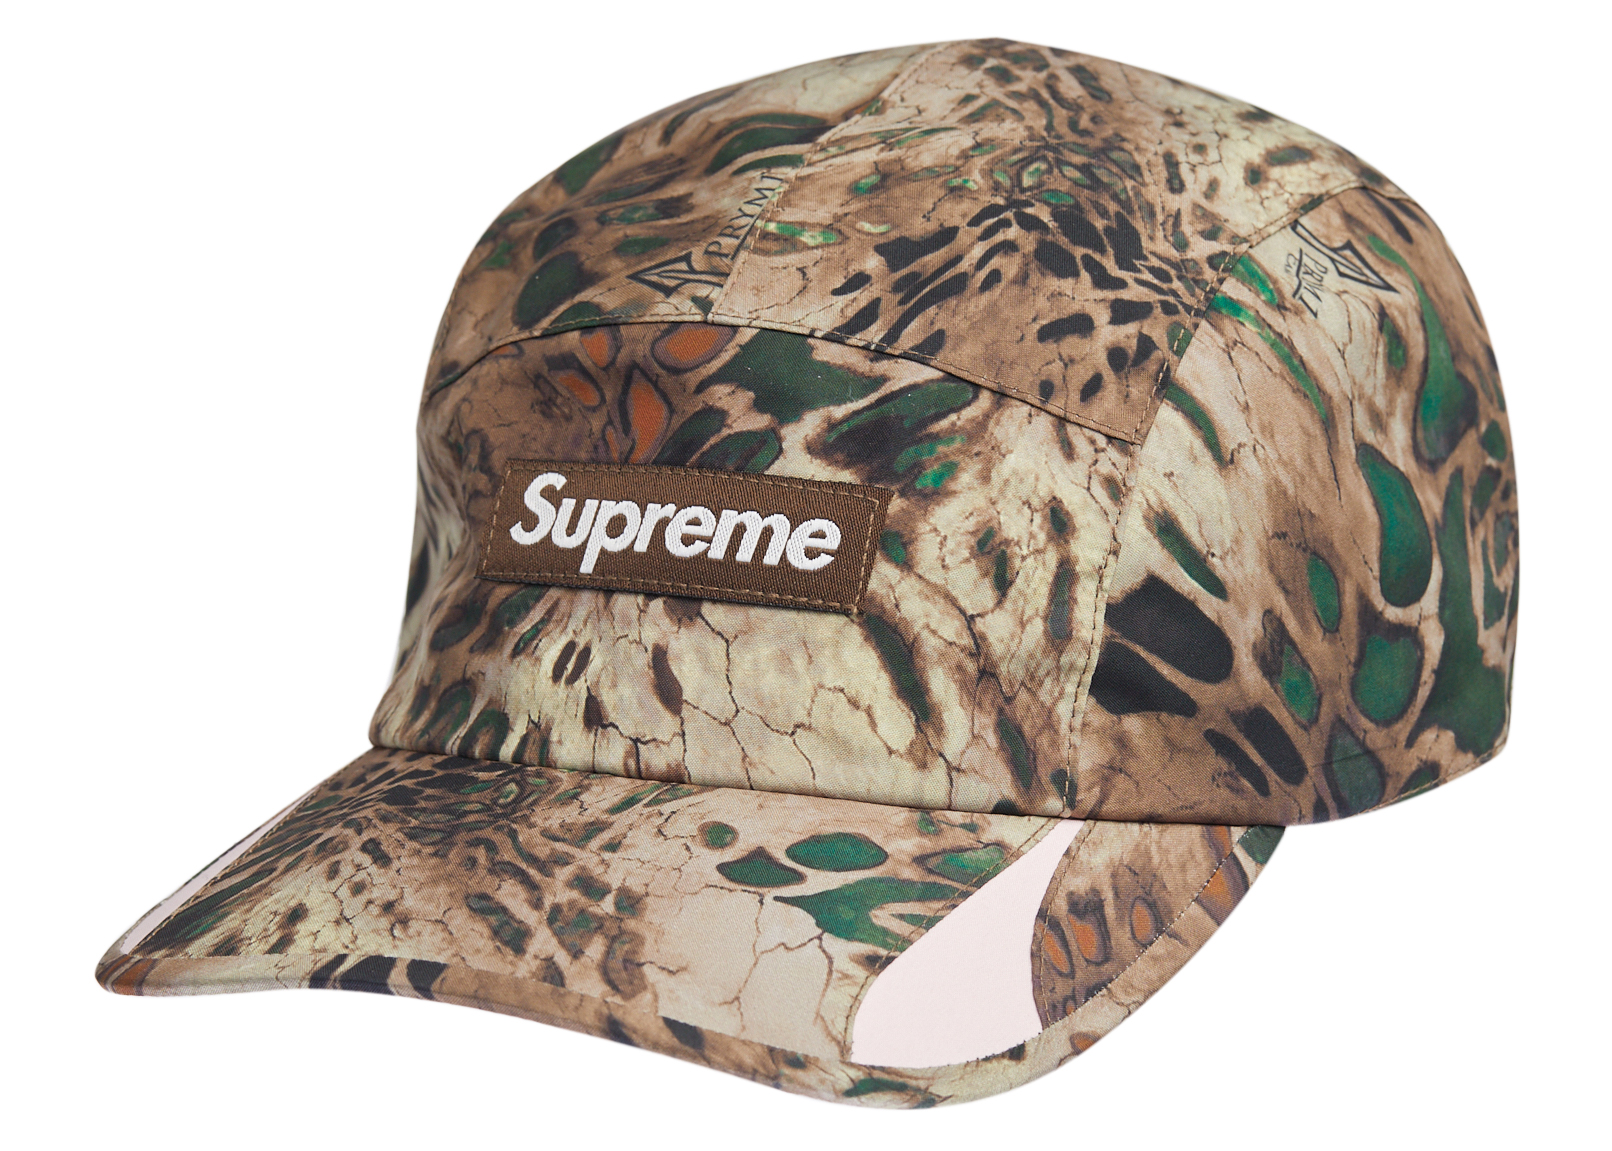 00s Supreme Tiger camo hat made in USA